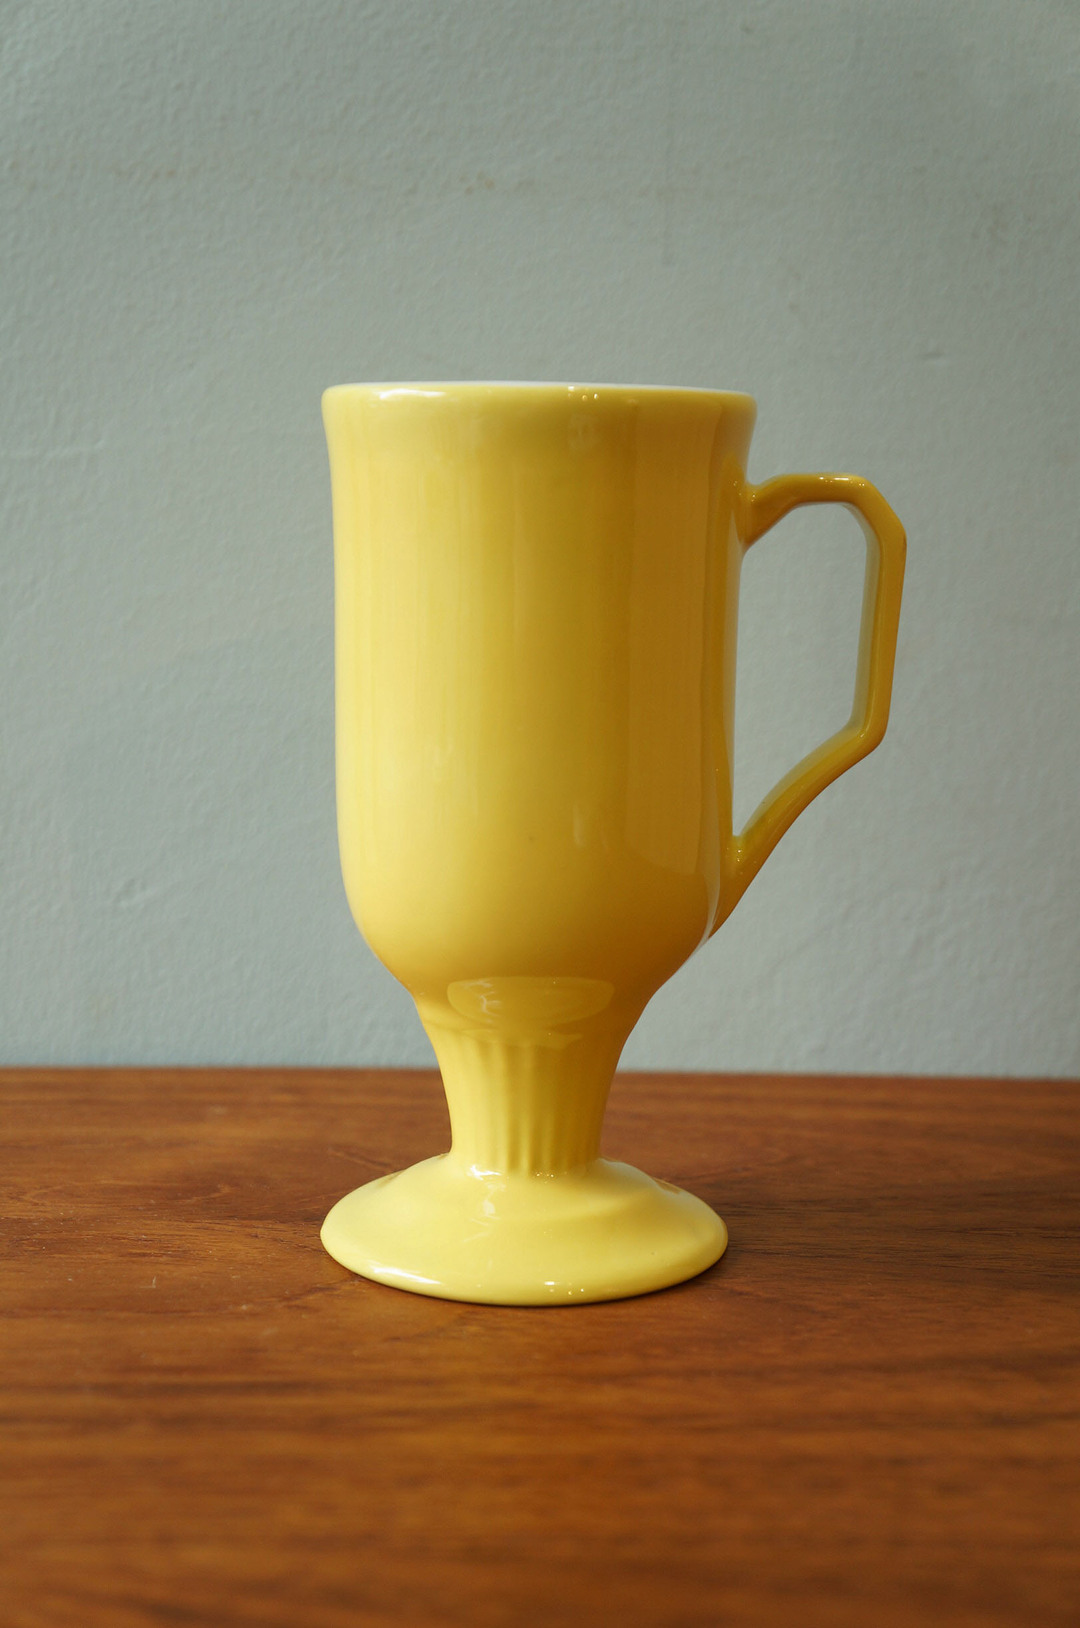 US Vintage Shenango Pedestal Mug Cup/アメリカヴィンテージ シェナンゴ マグカップ 陶器 食器 ミッドセンチュリー レトロ 4